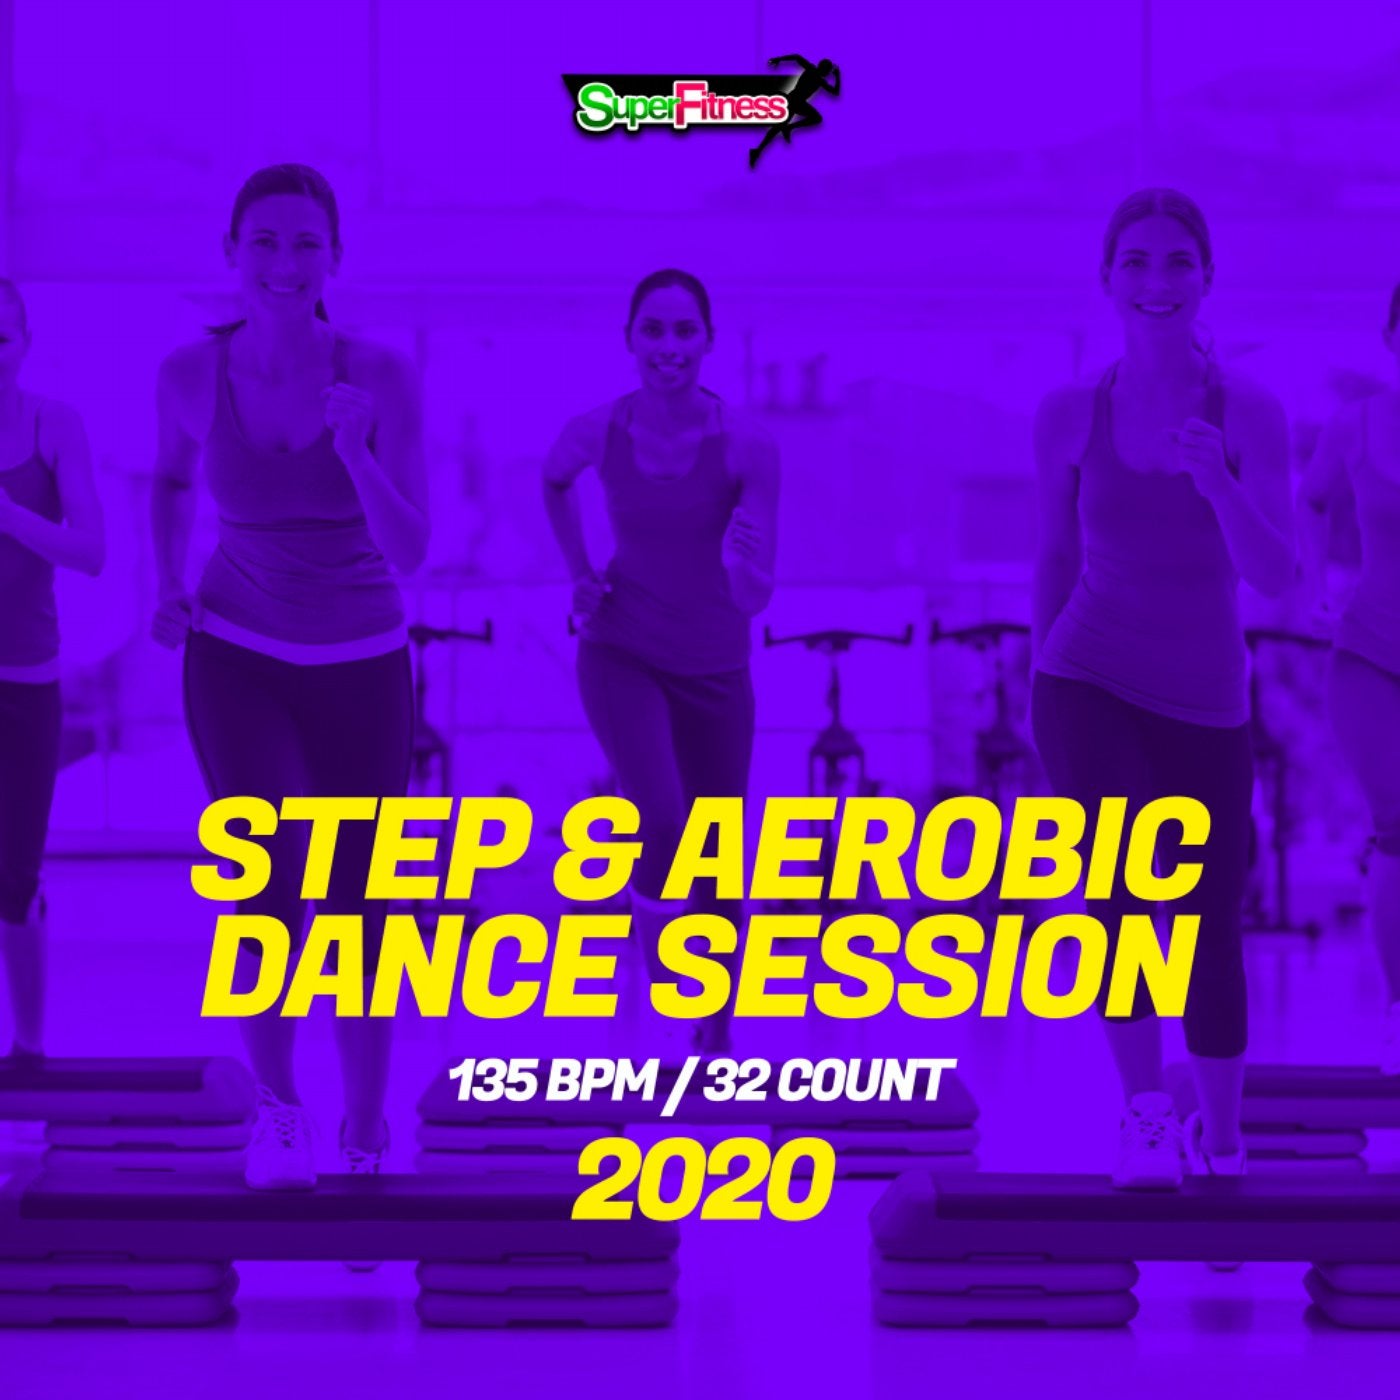 Step & Aerobic Dance Session 2020: 135 bpm/32 count